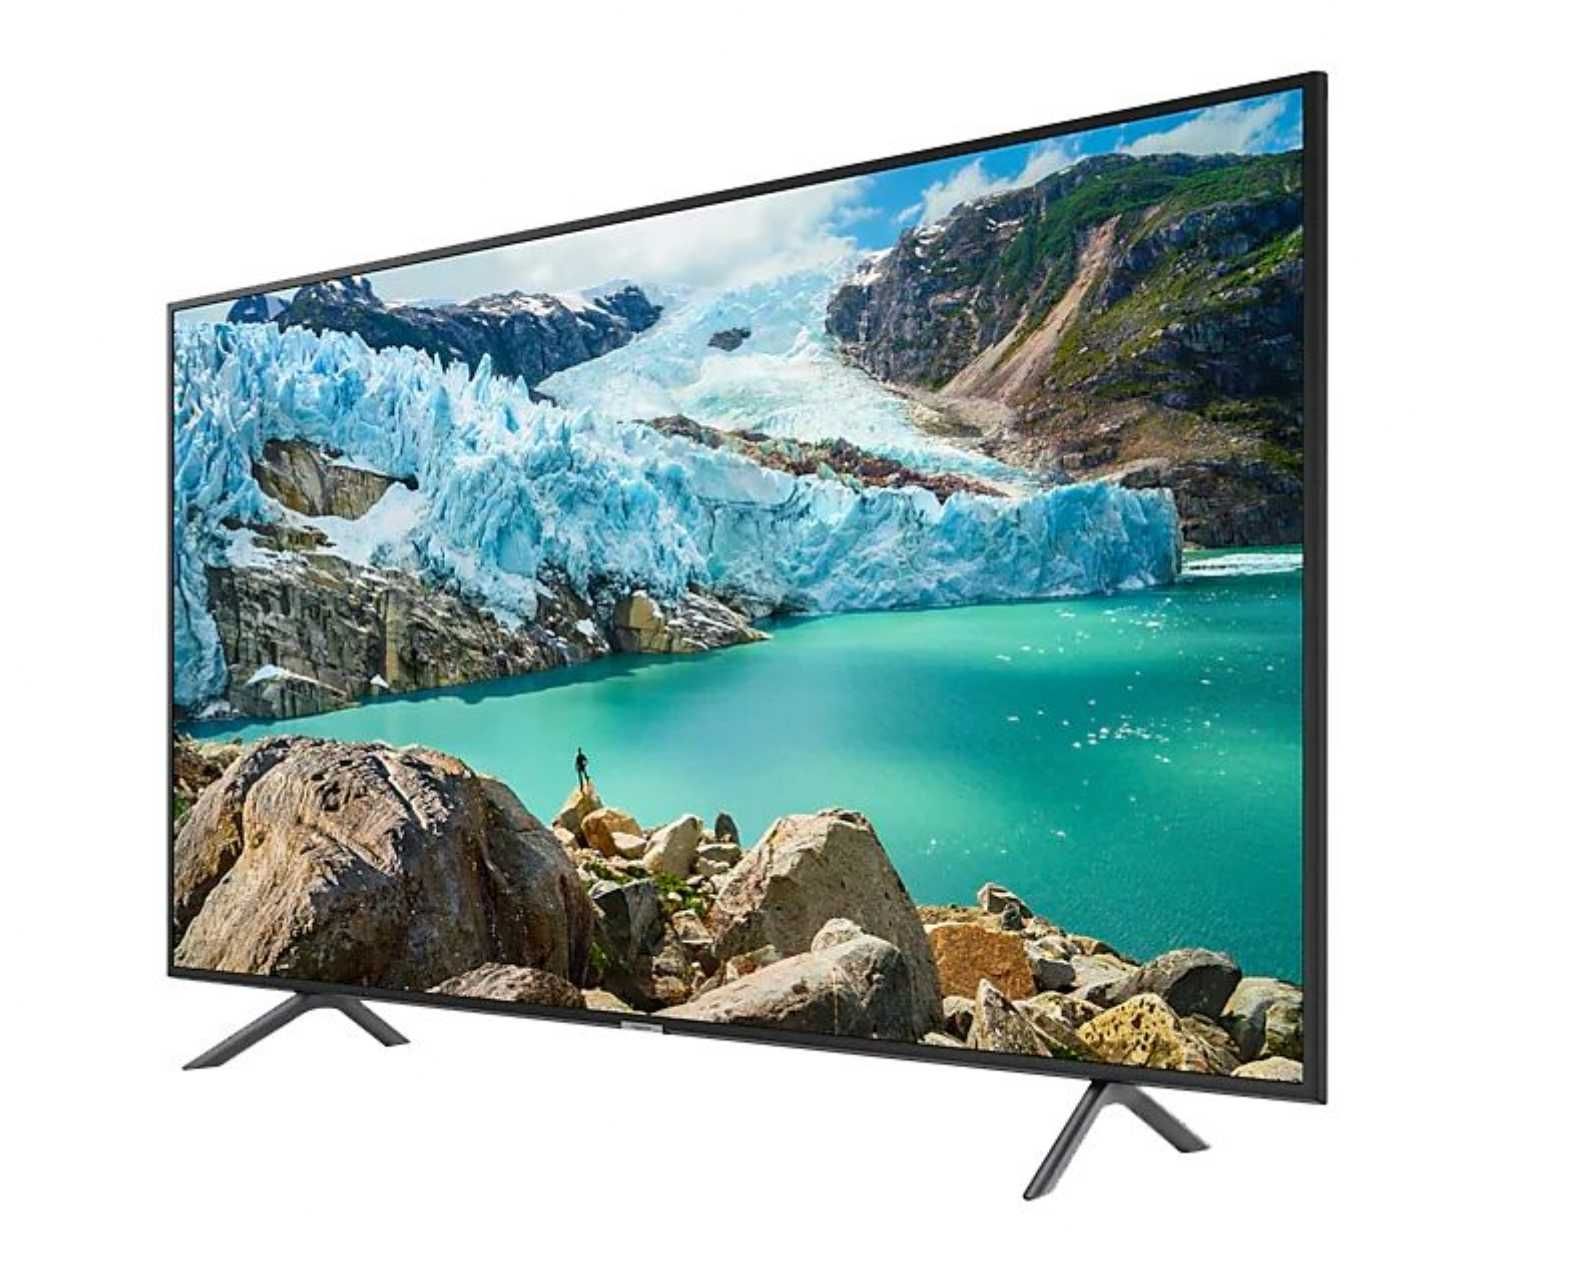 TV Samsung 65" UE65RU7105 LED Smart TV 4K